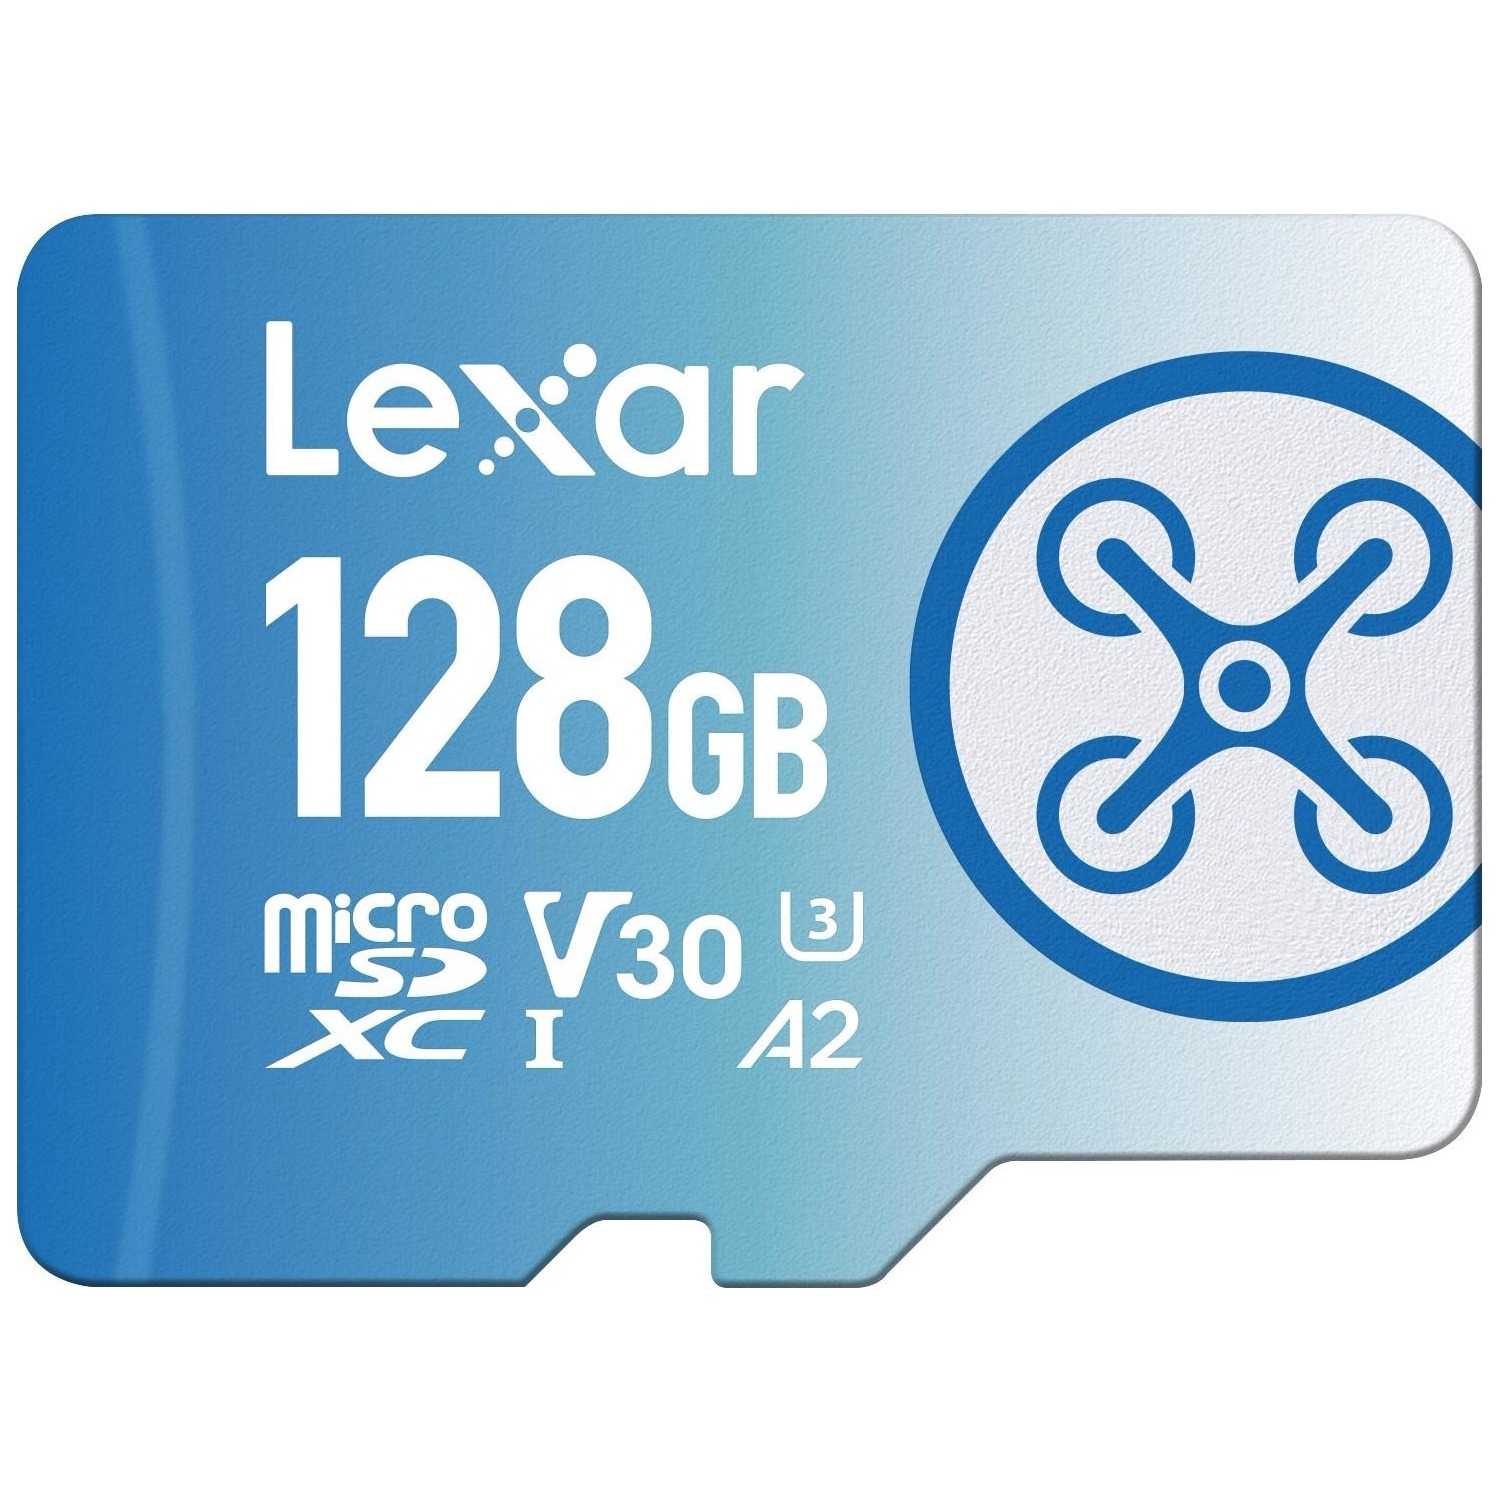 Immagine per MicroSD Lexar FLY 128GB UHS-I A2 V30 da DIMOStore